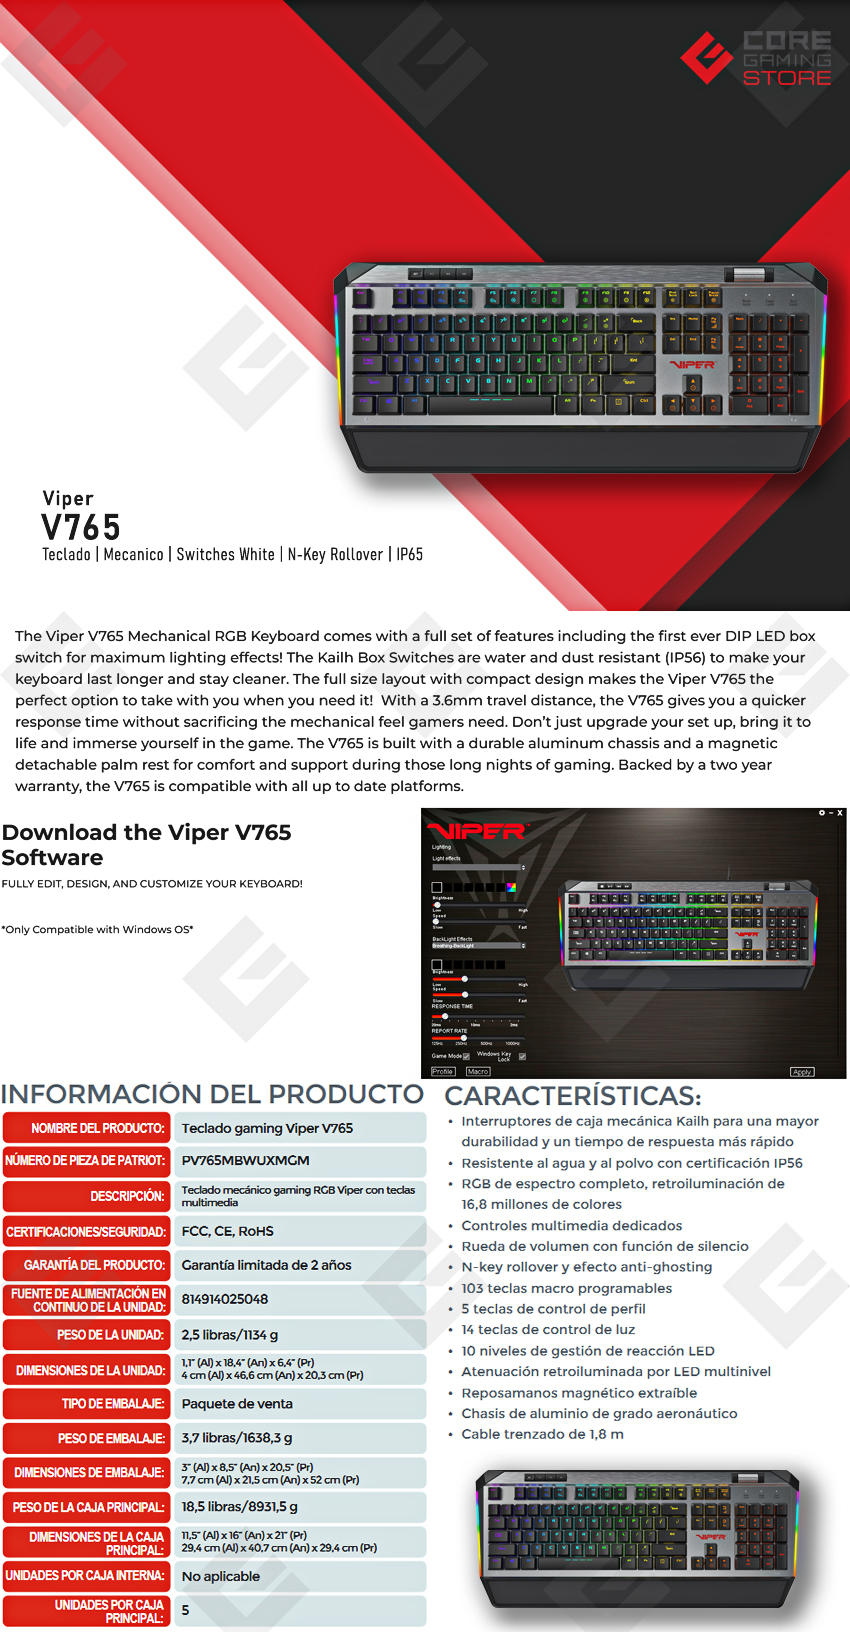 Teclado Viper V765, Mecánico, Inglés, Proteccion IP65 Agua y Polvo, RGB, Switches Kailh White, 100% - PV765MBWUXMGM